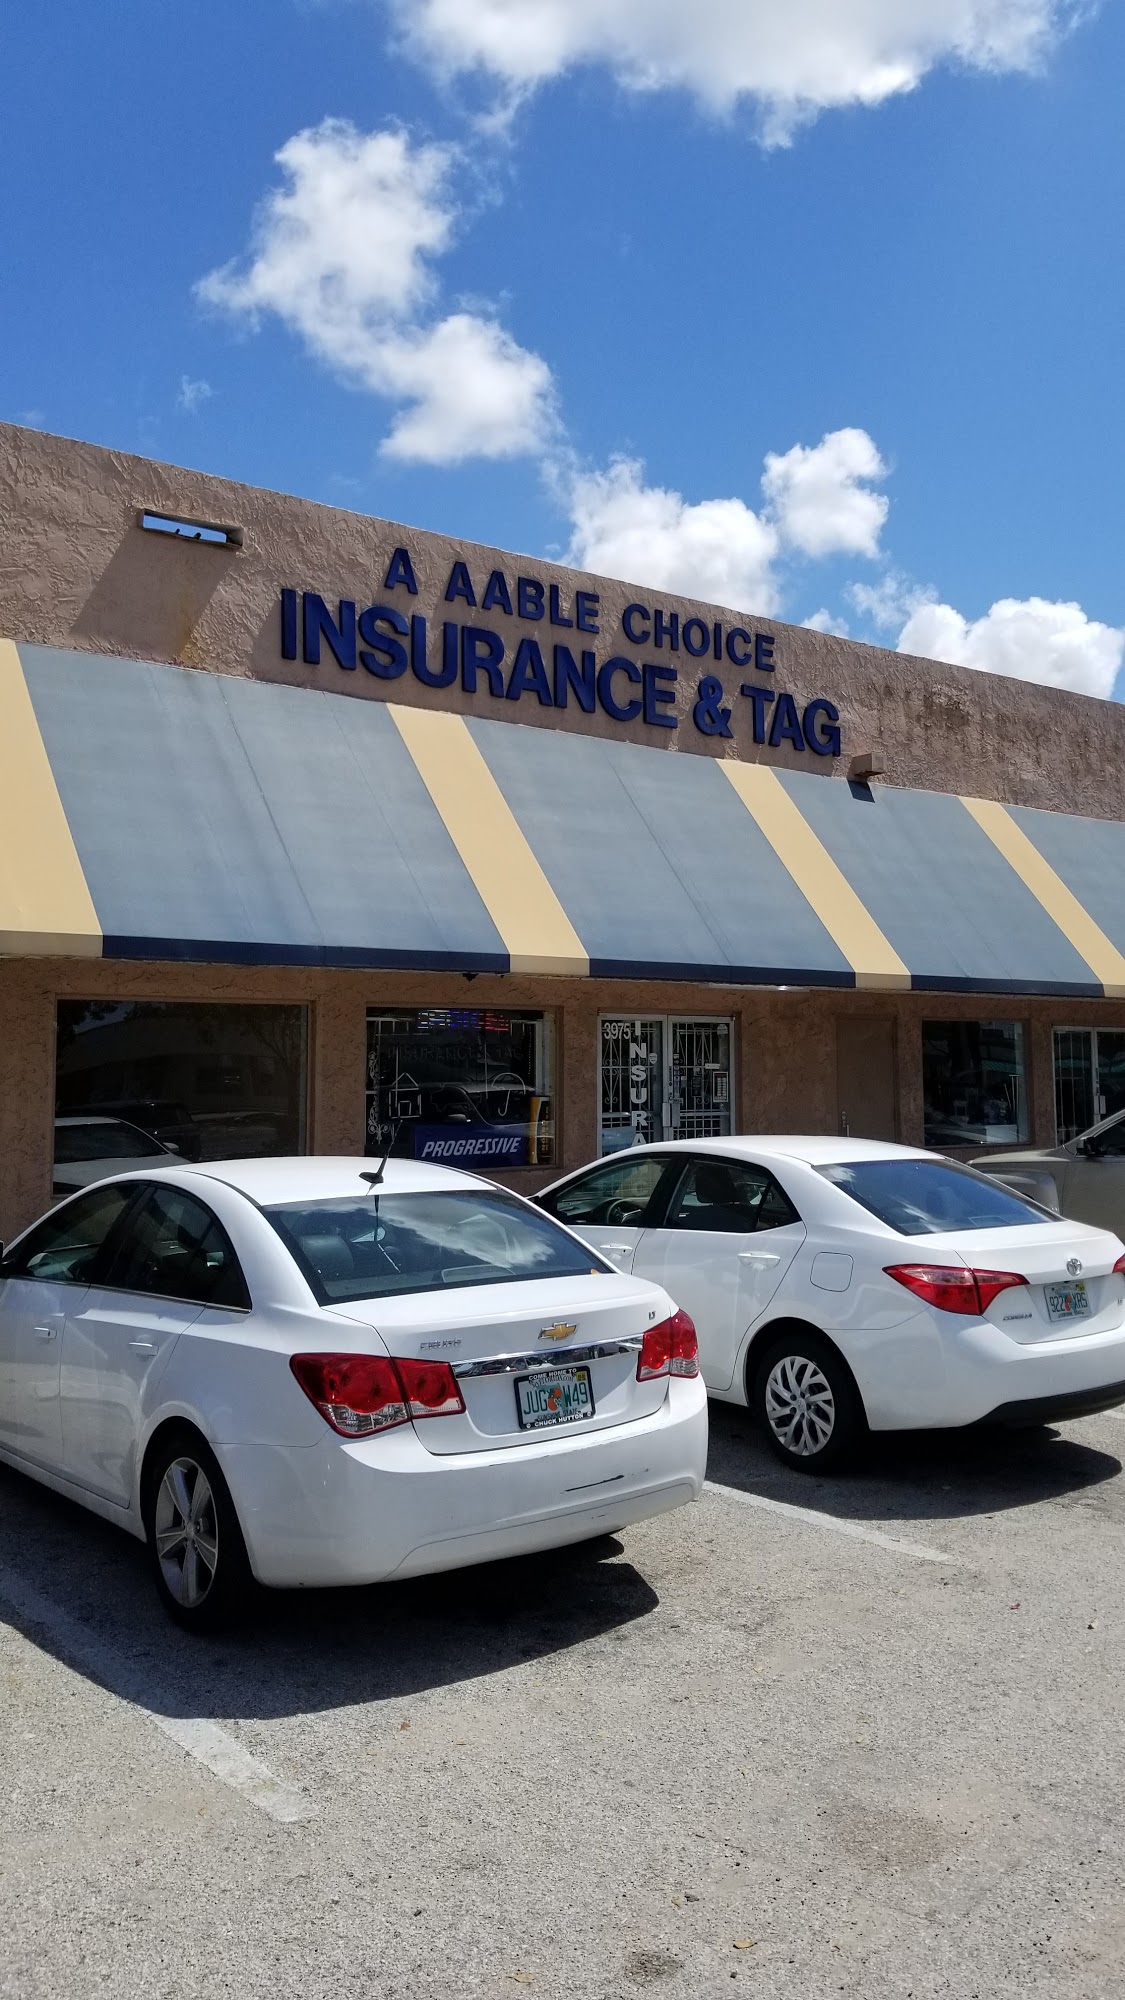 A Aable Choice Insurance & Tag